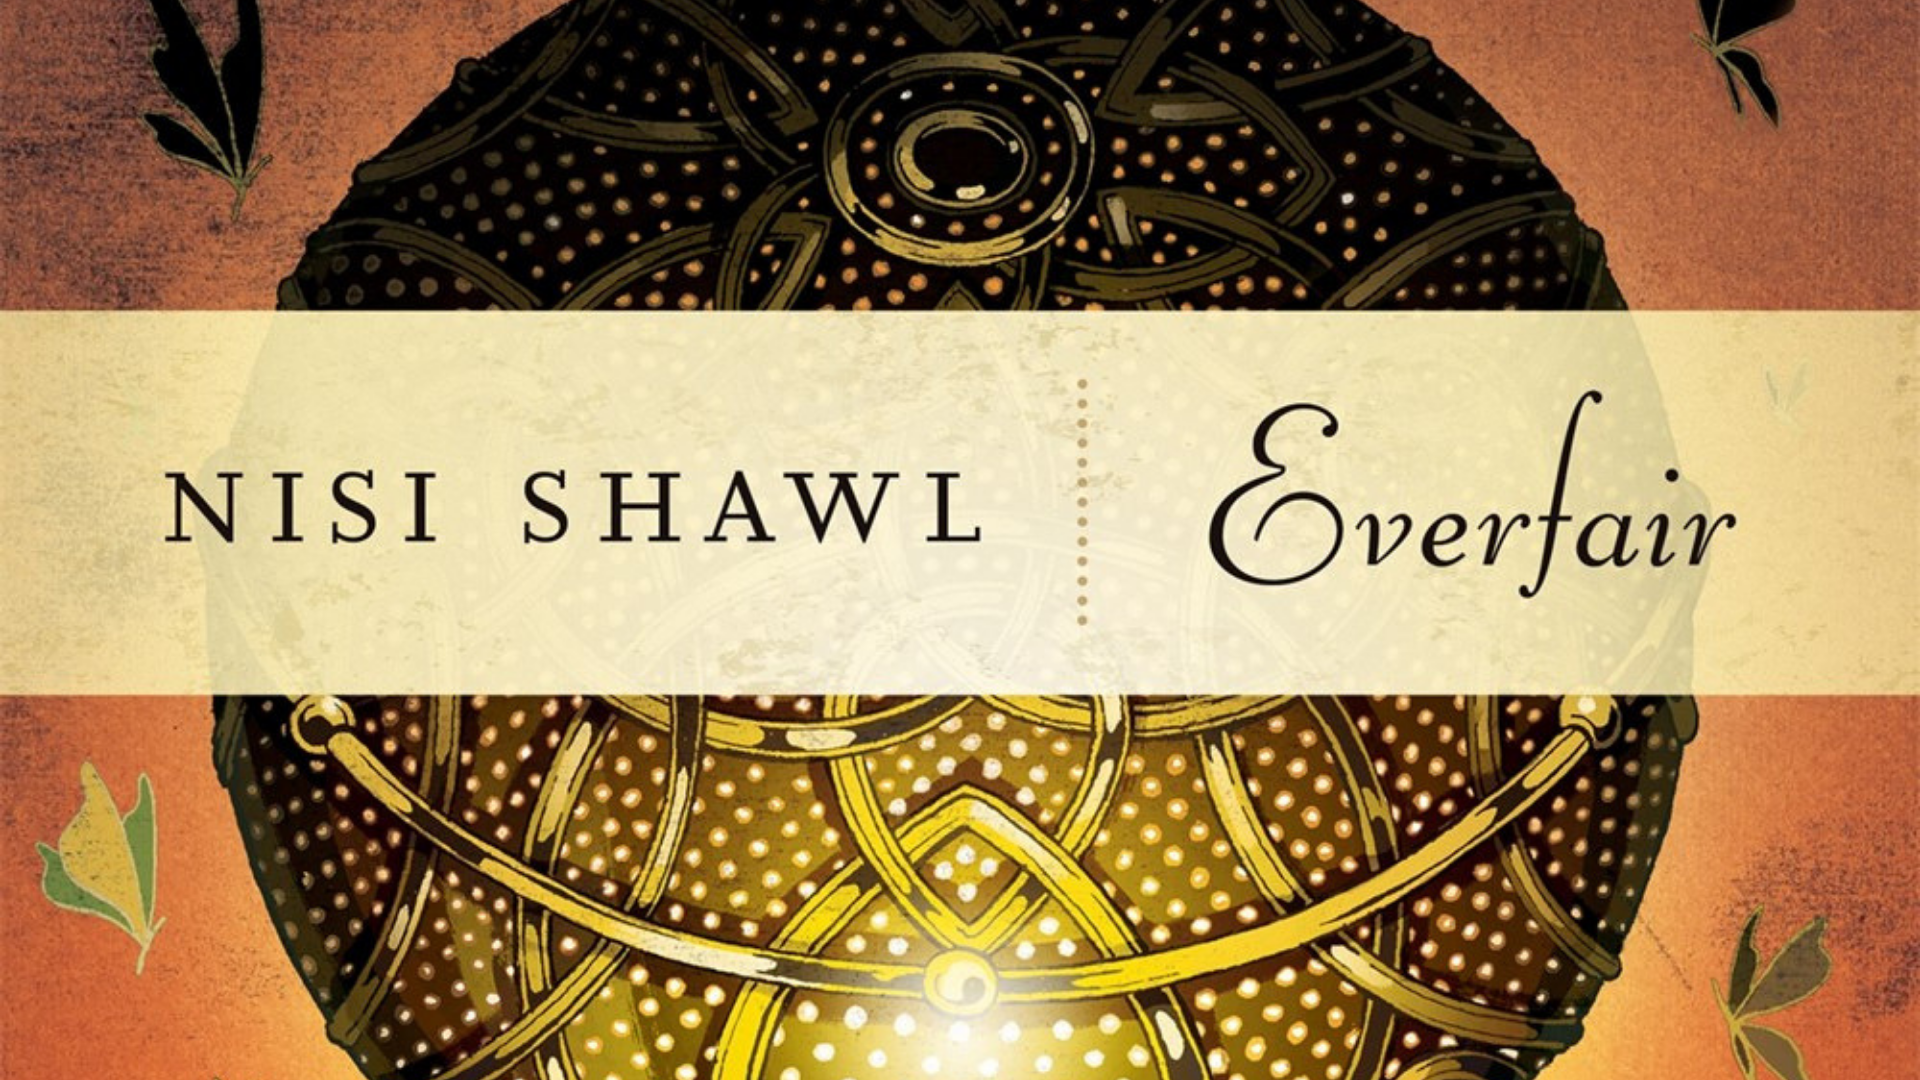 Book Club: Everfair by Nisi Shawl